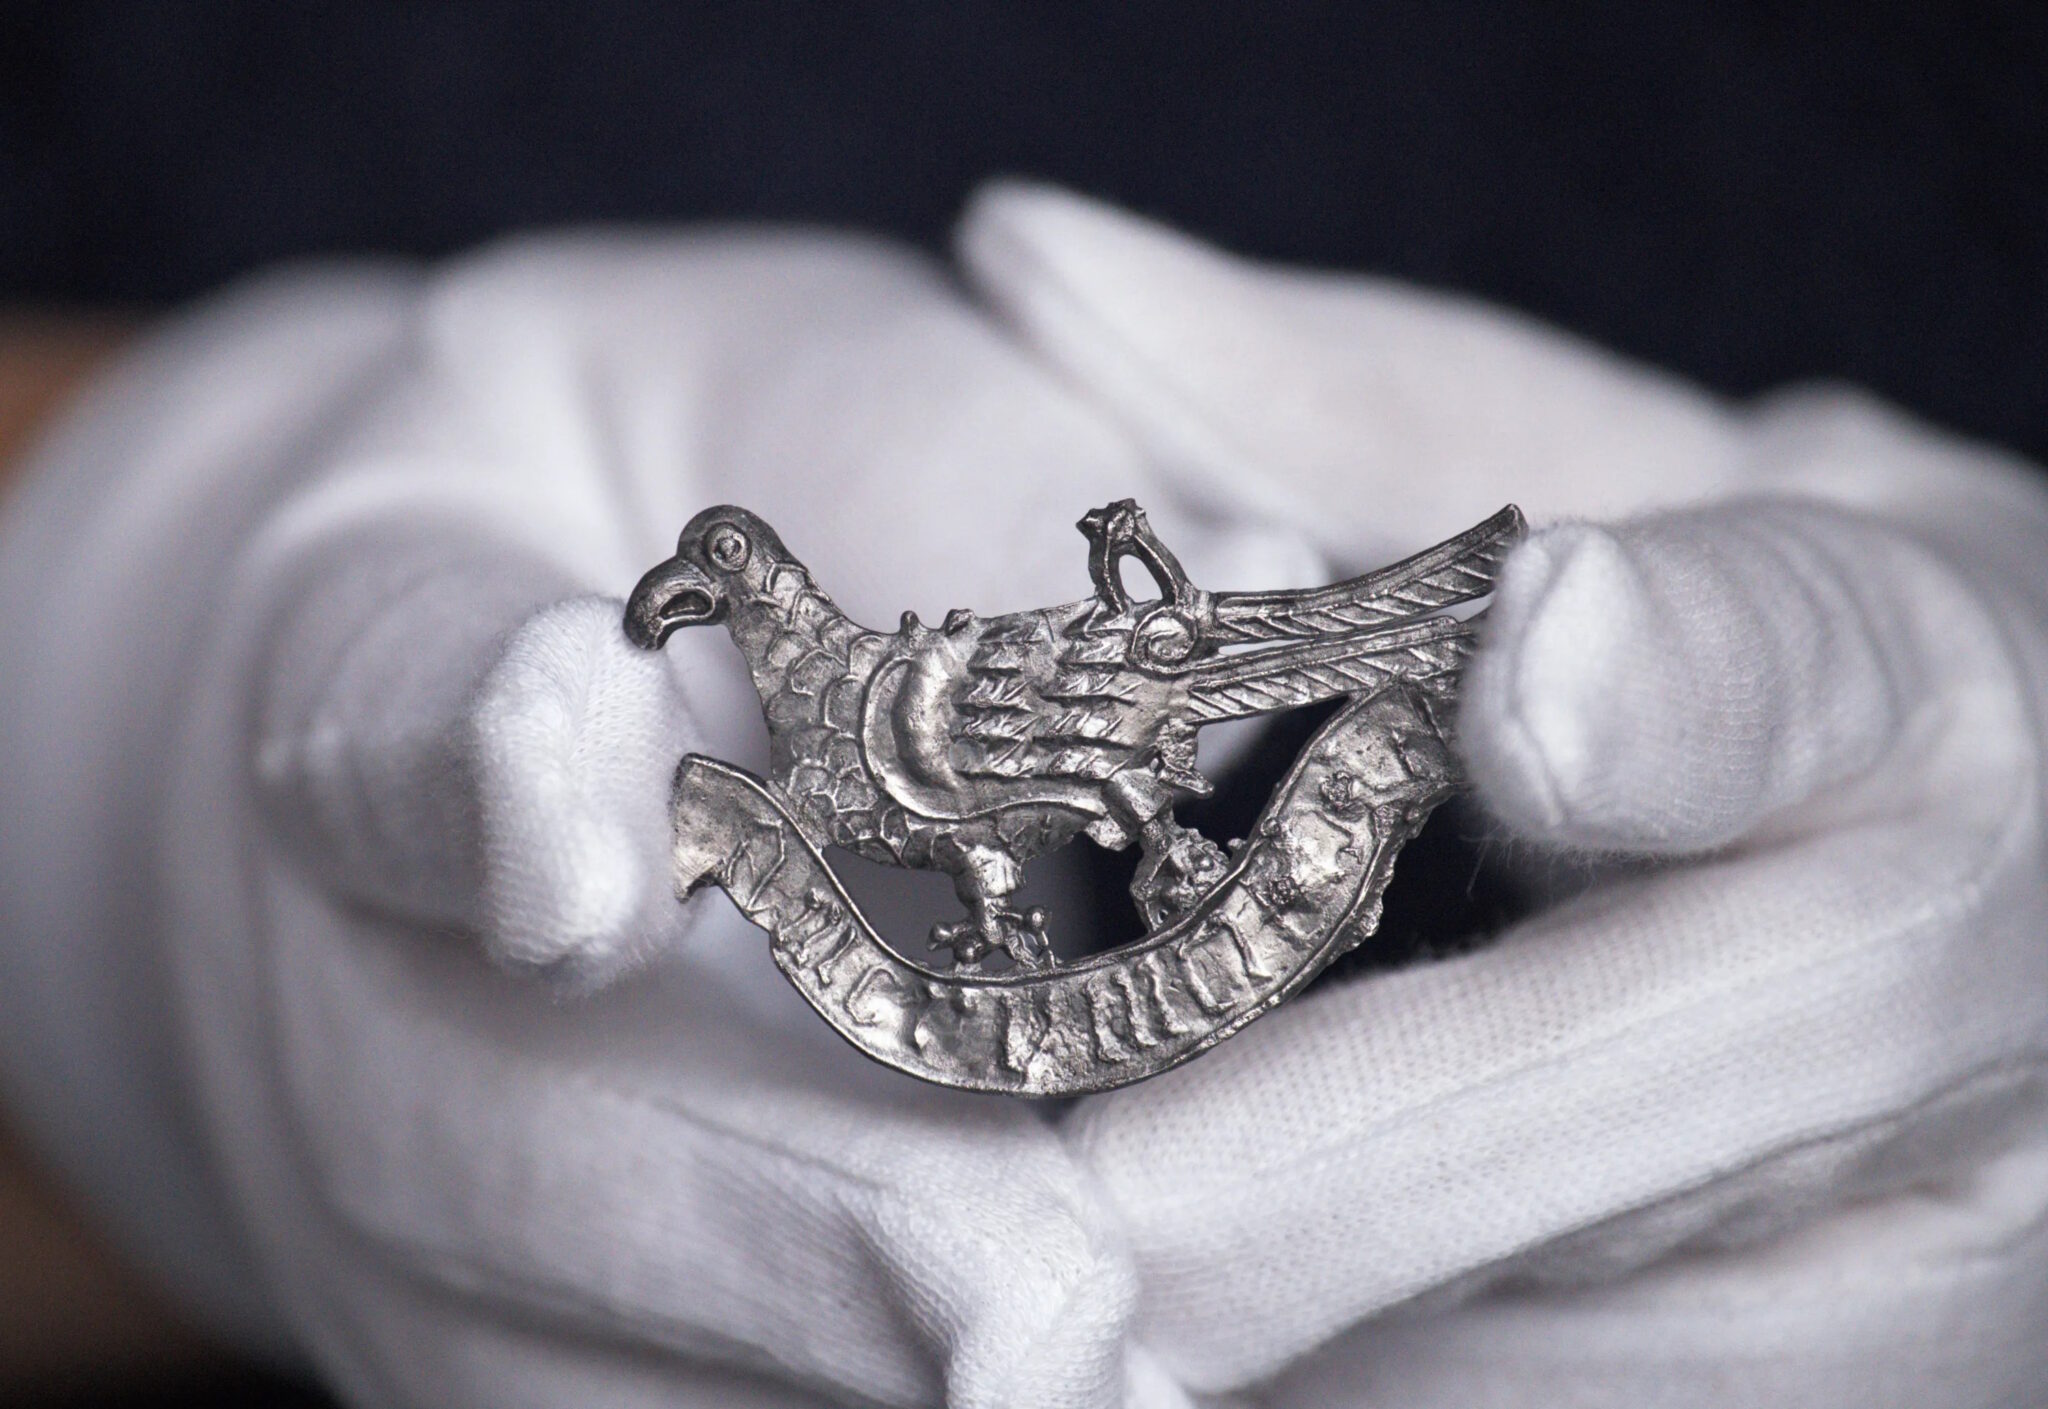 Medieval love token found under Gdańsk port crane